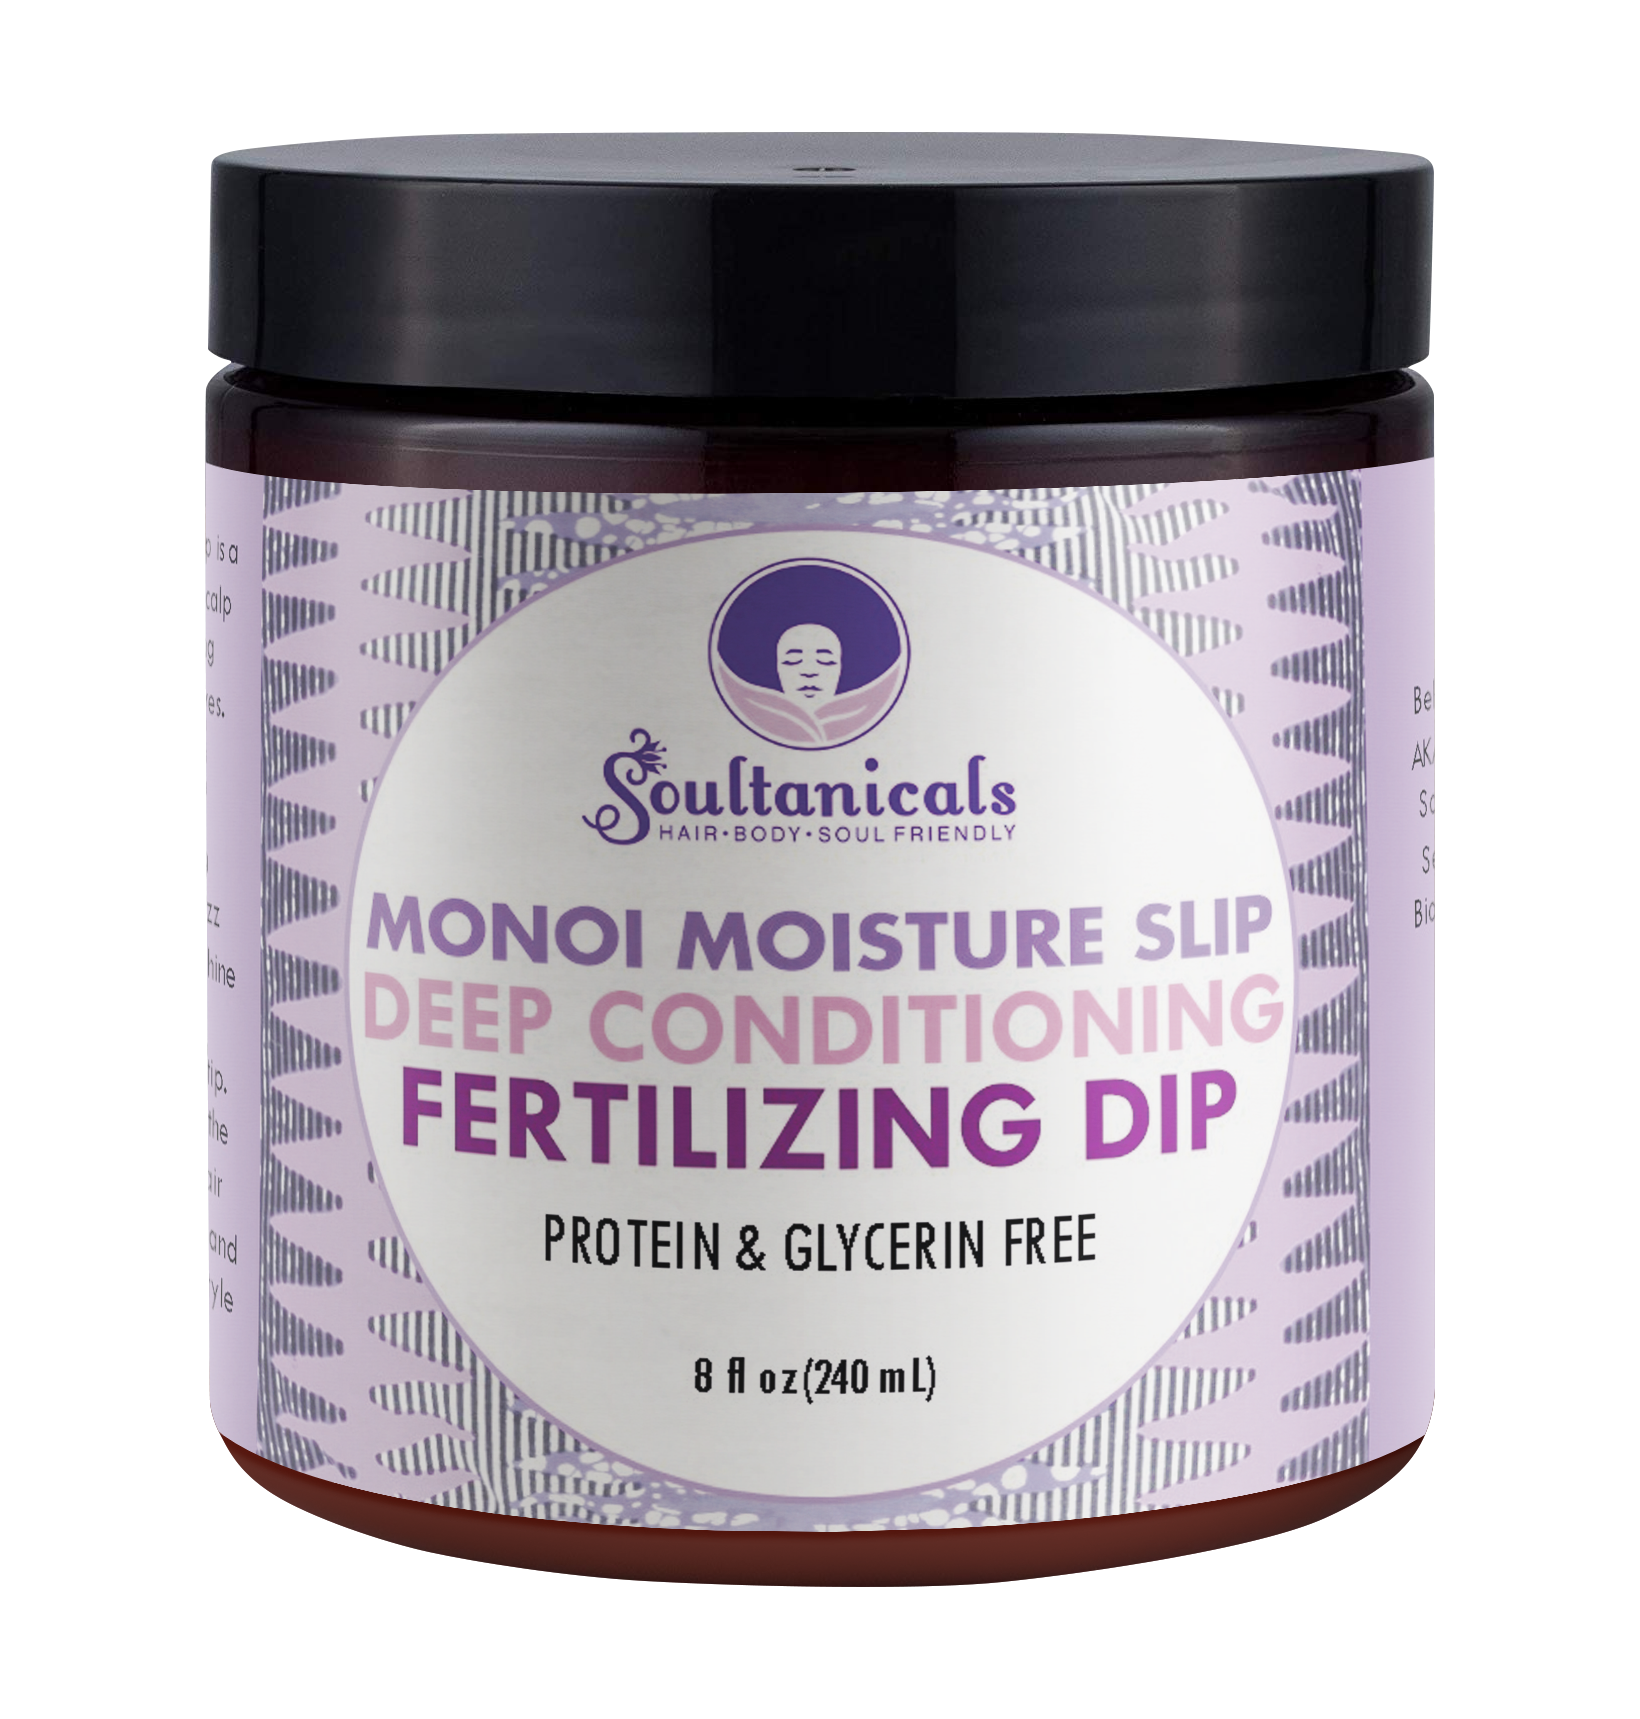 Monoi Moisture Slip- Deep Conditioning, Fertilizing Dip